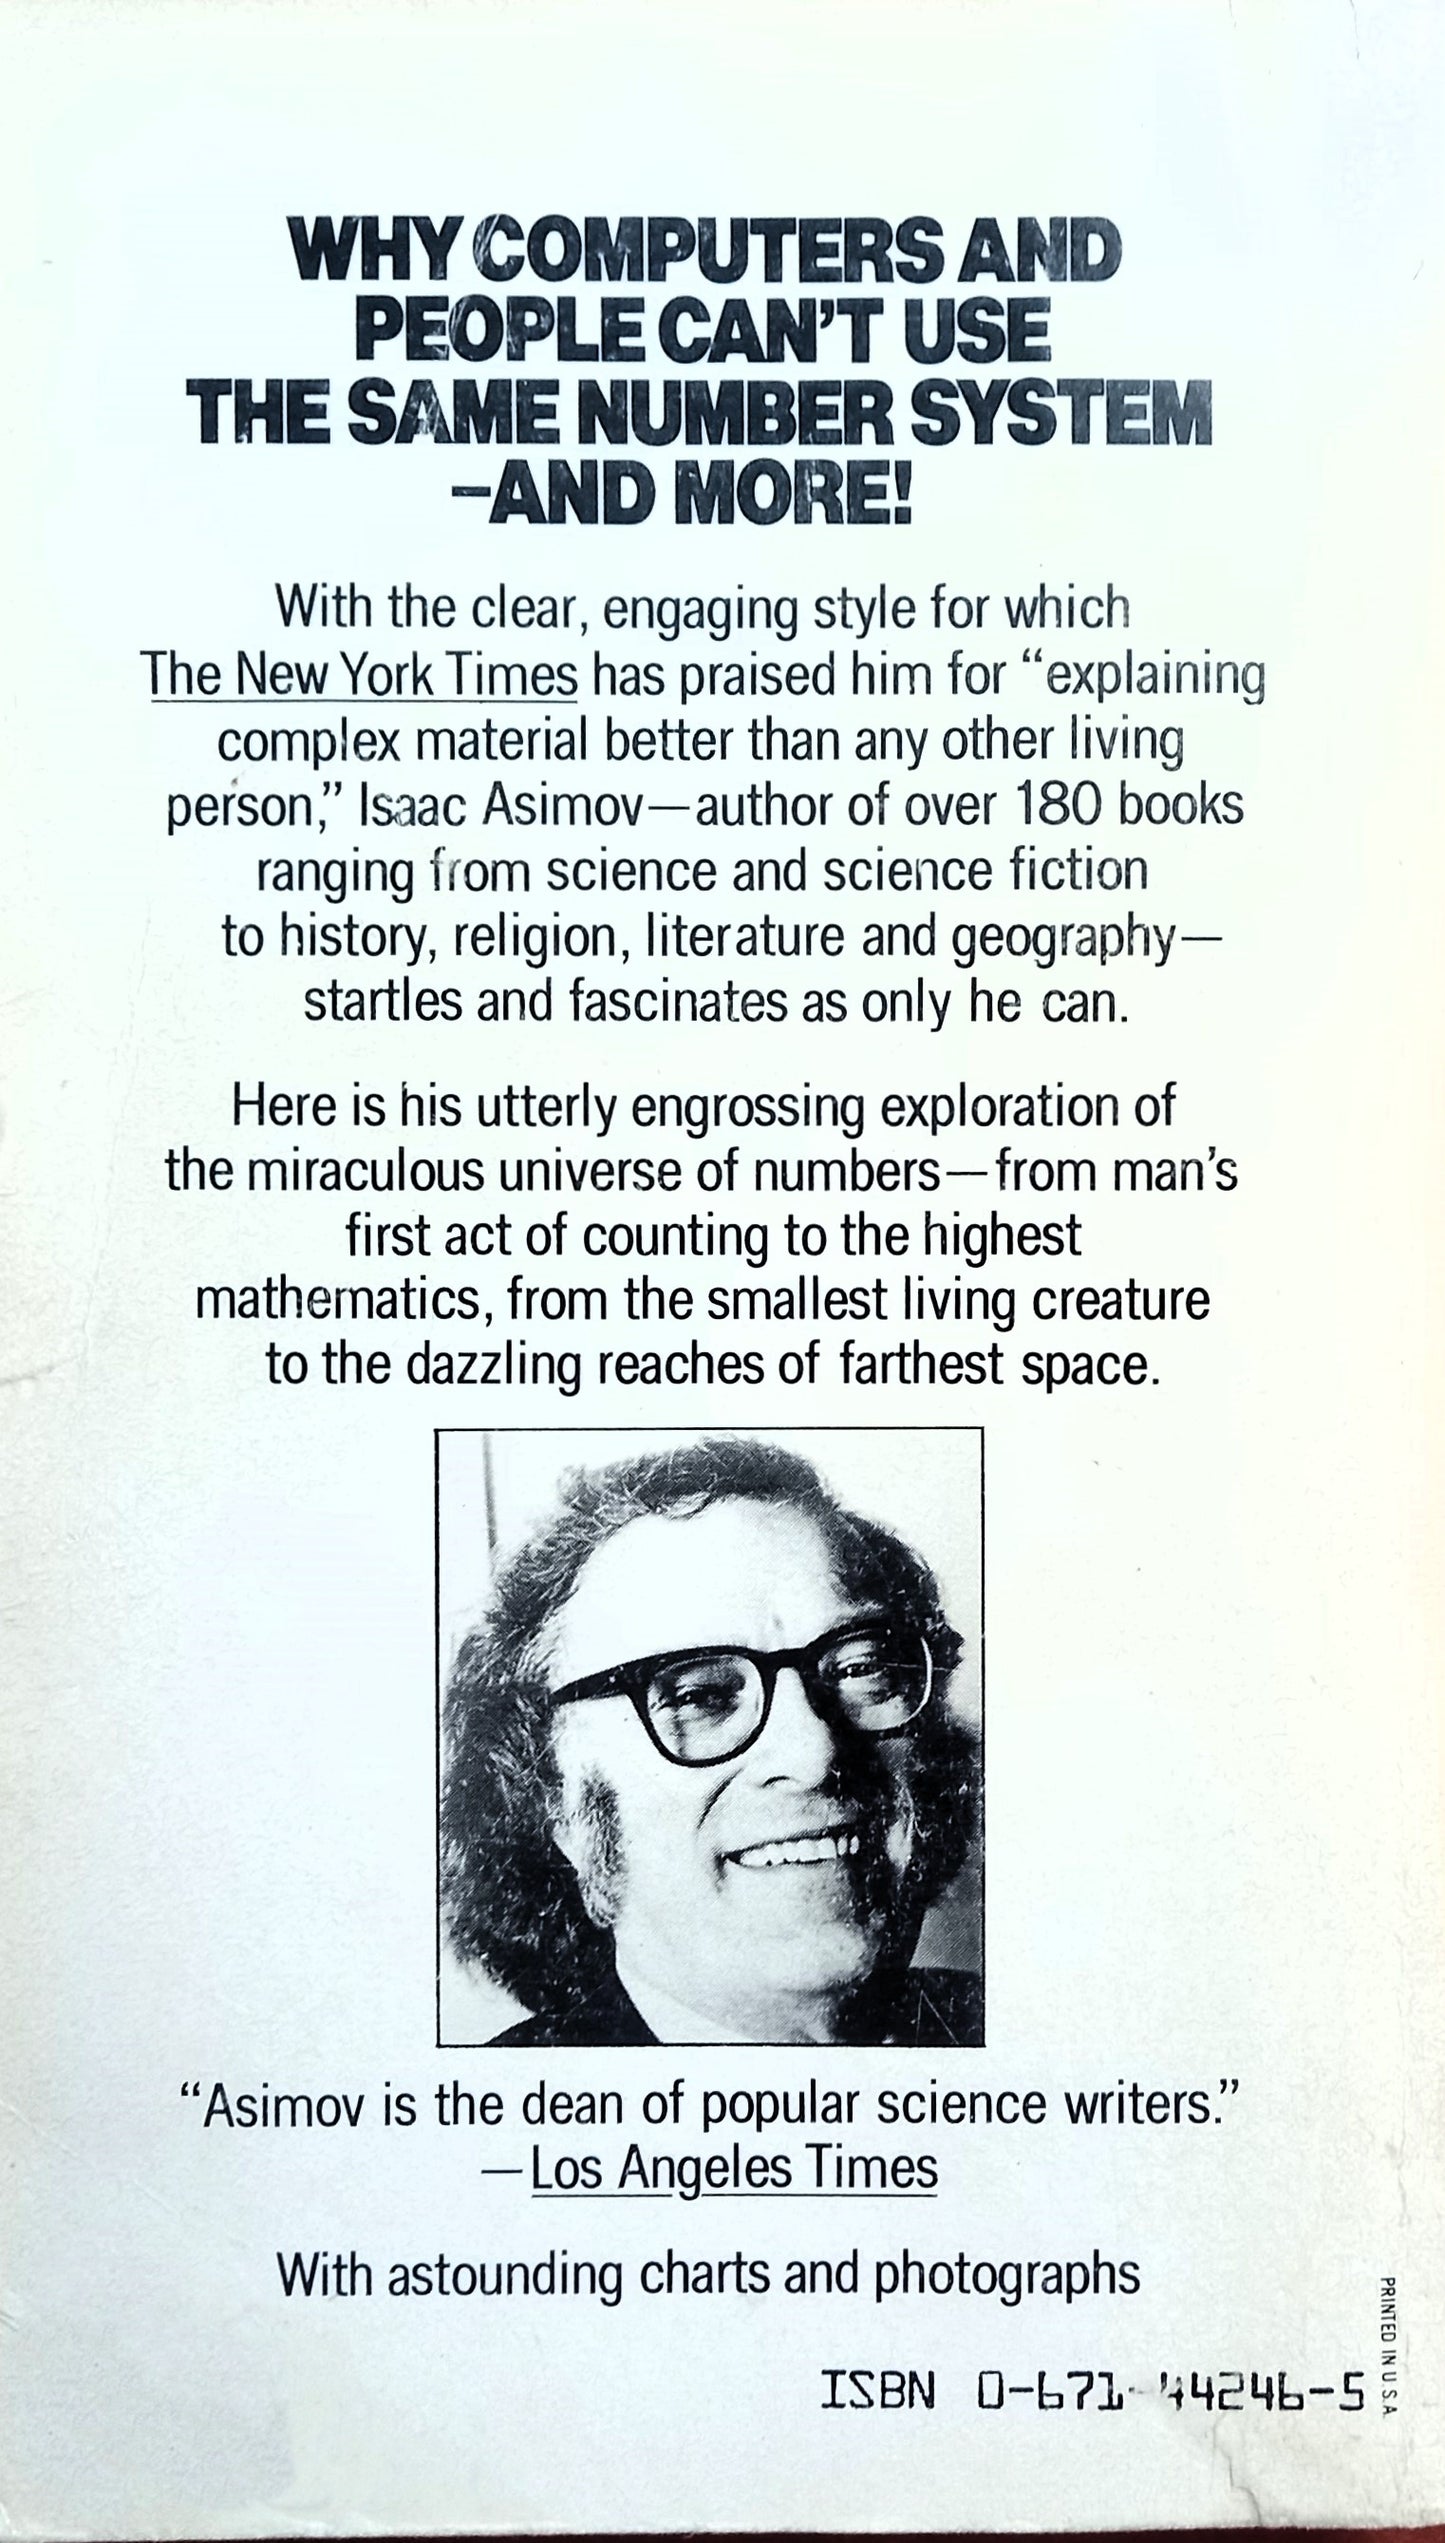 Asimov on Numbers